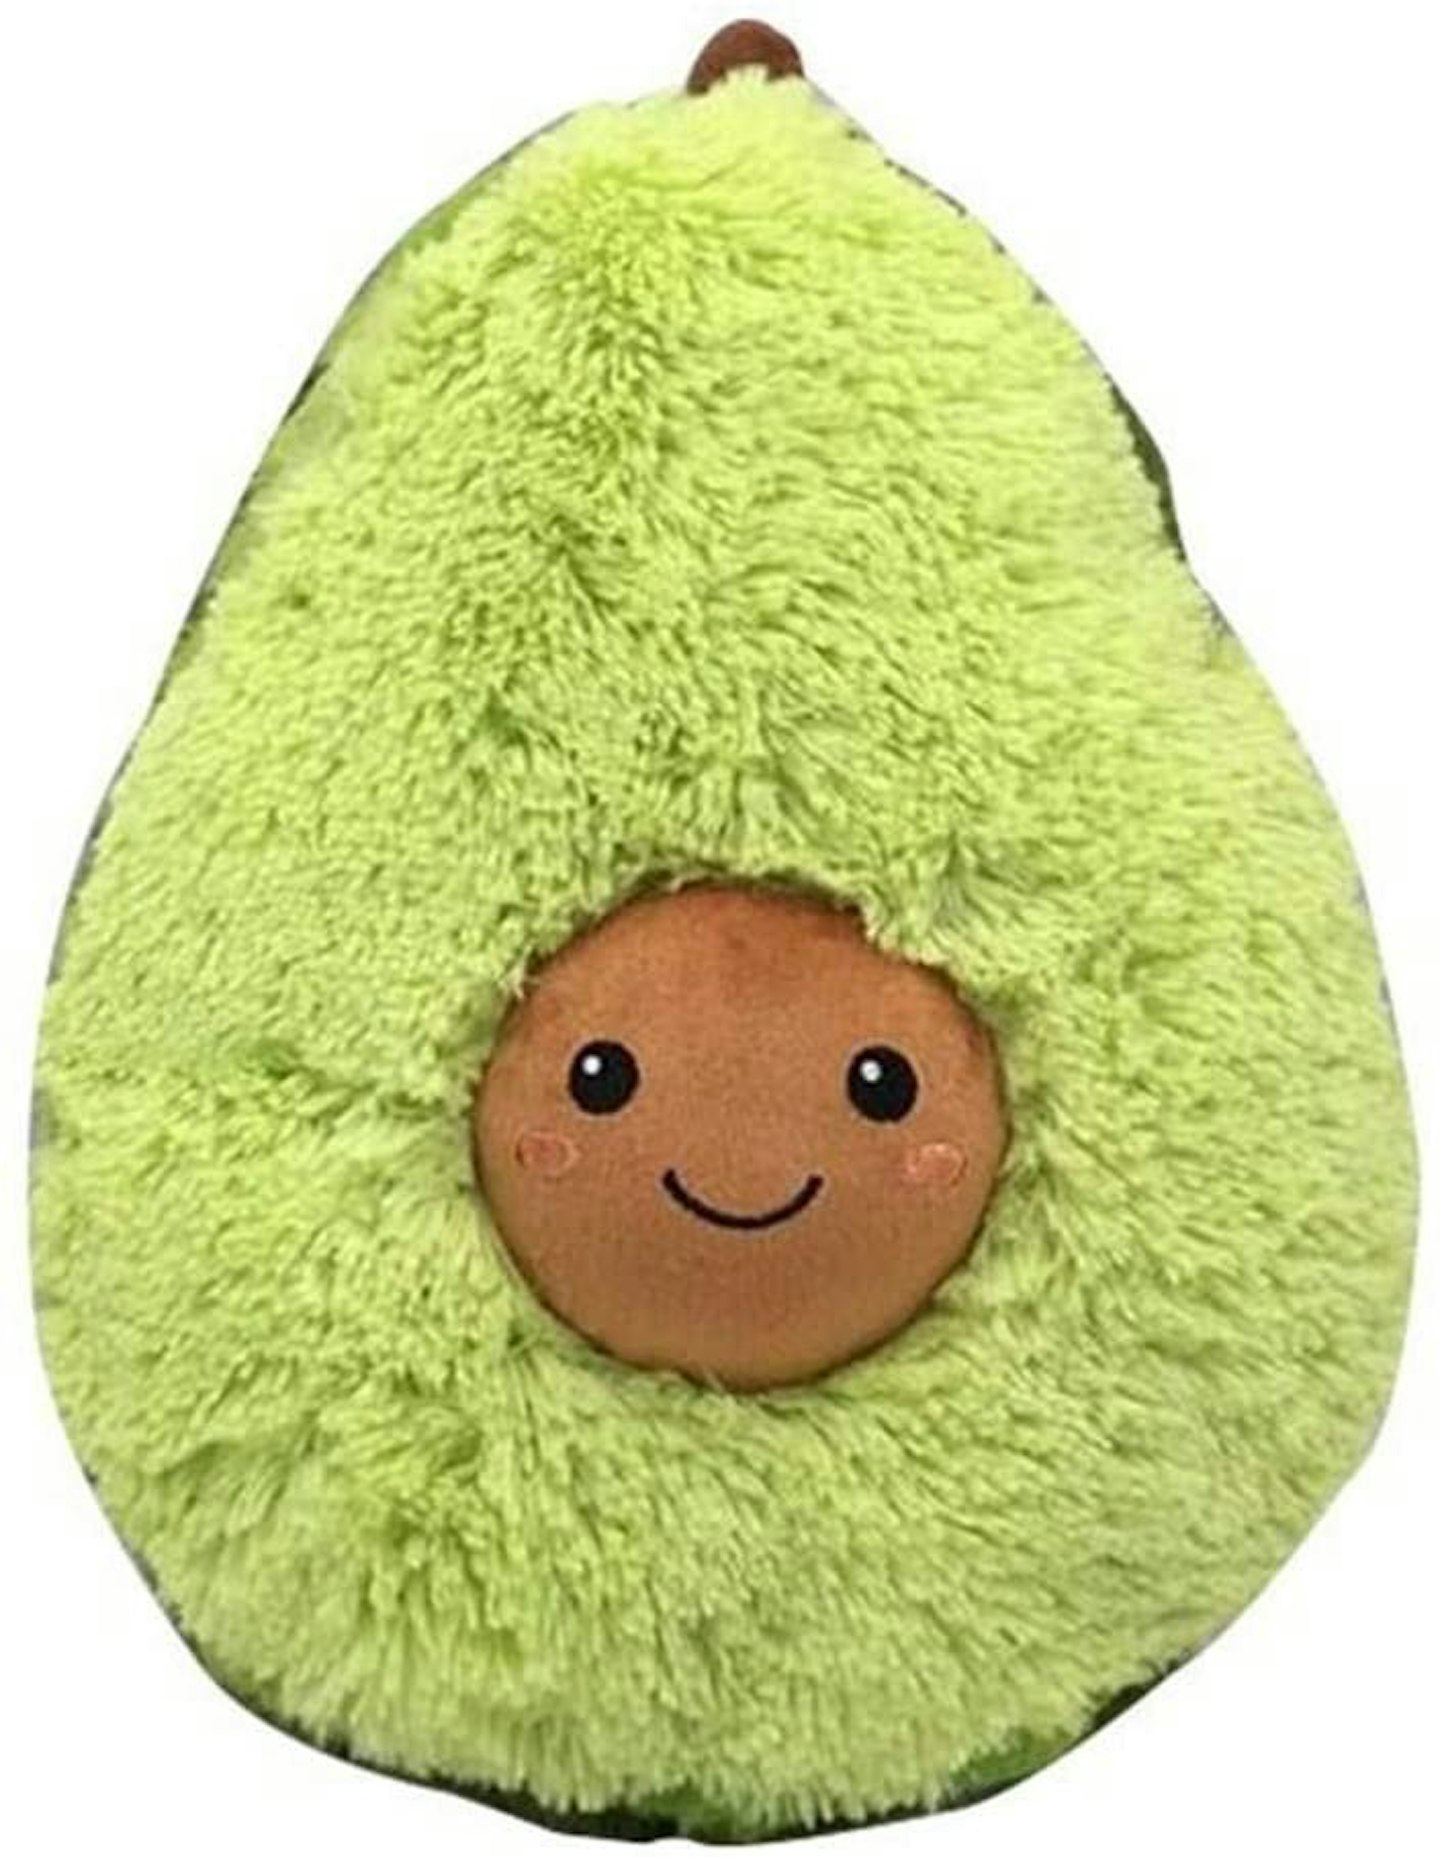 QYWSJ Stuffed Plush Avocado Toy